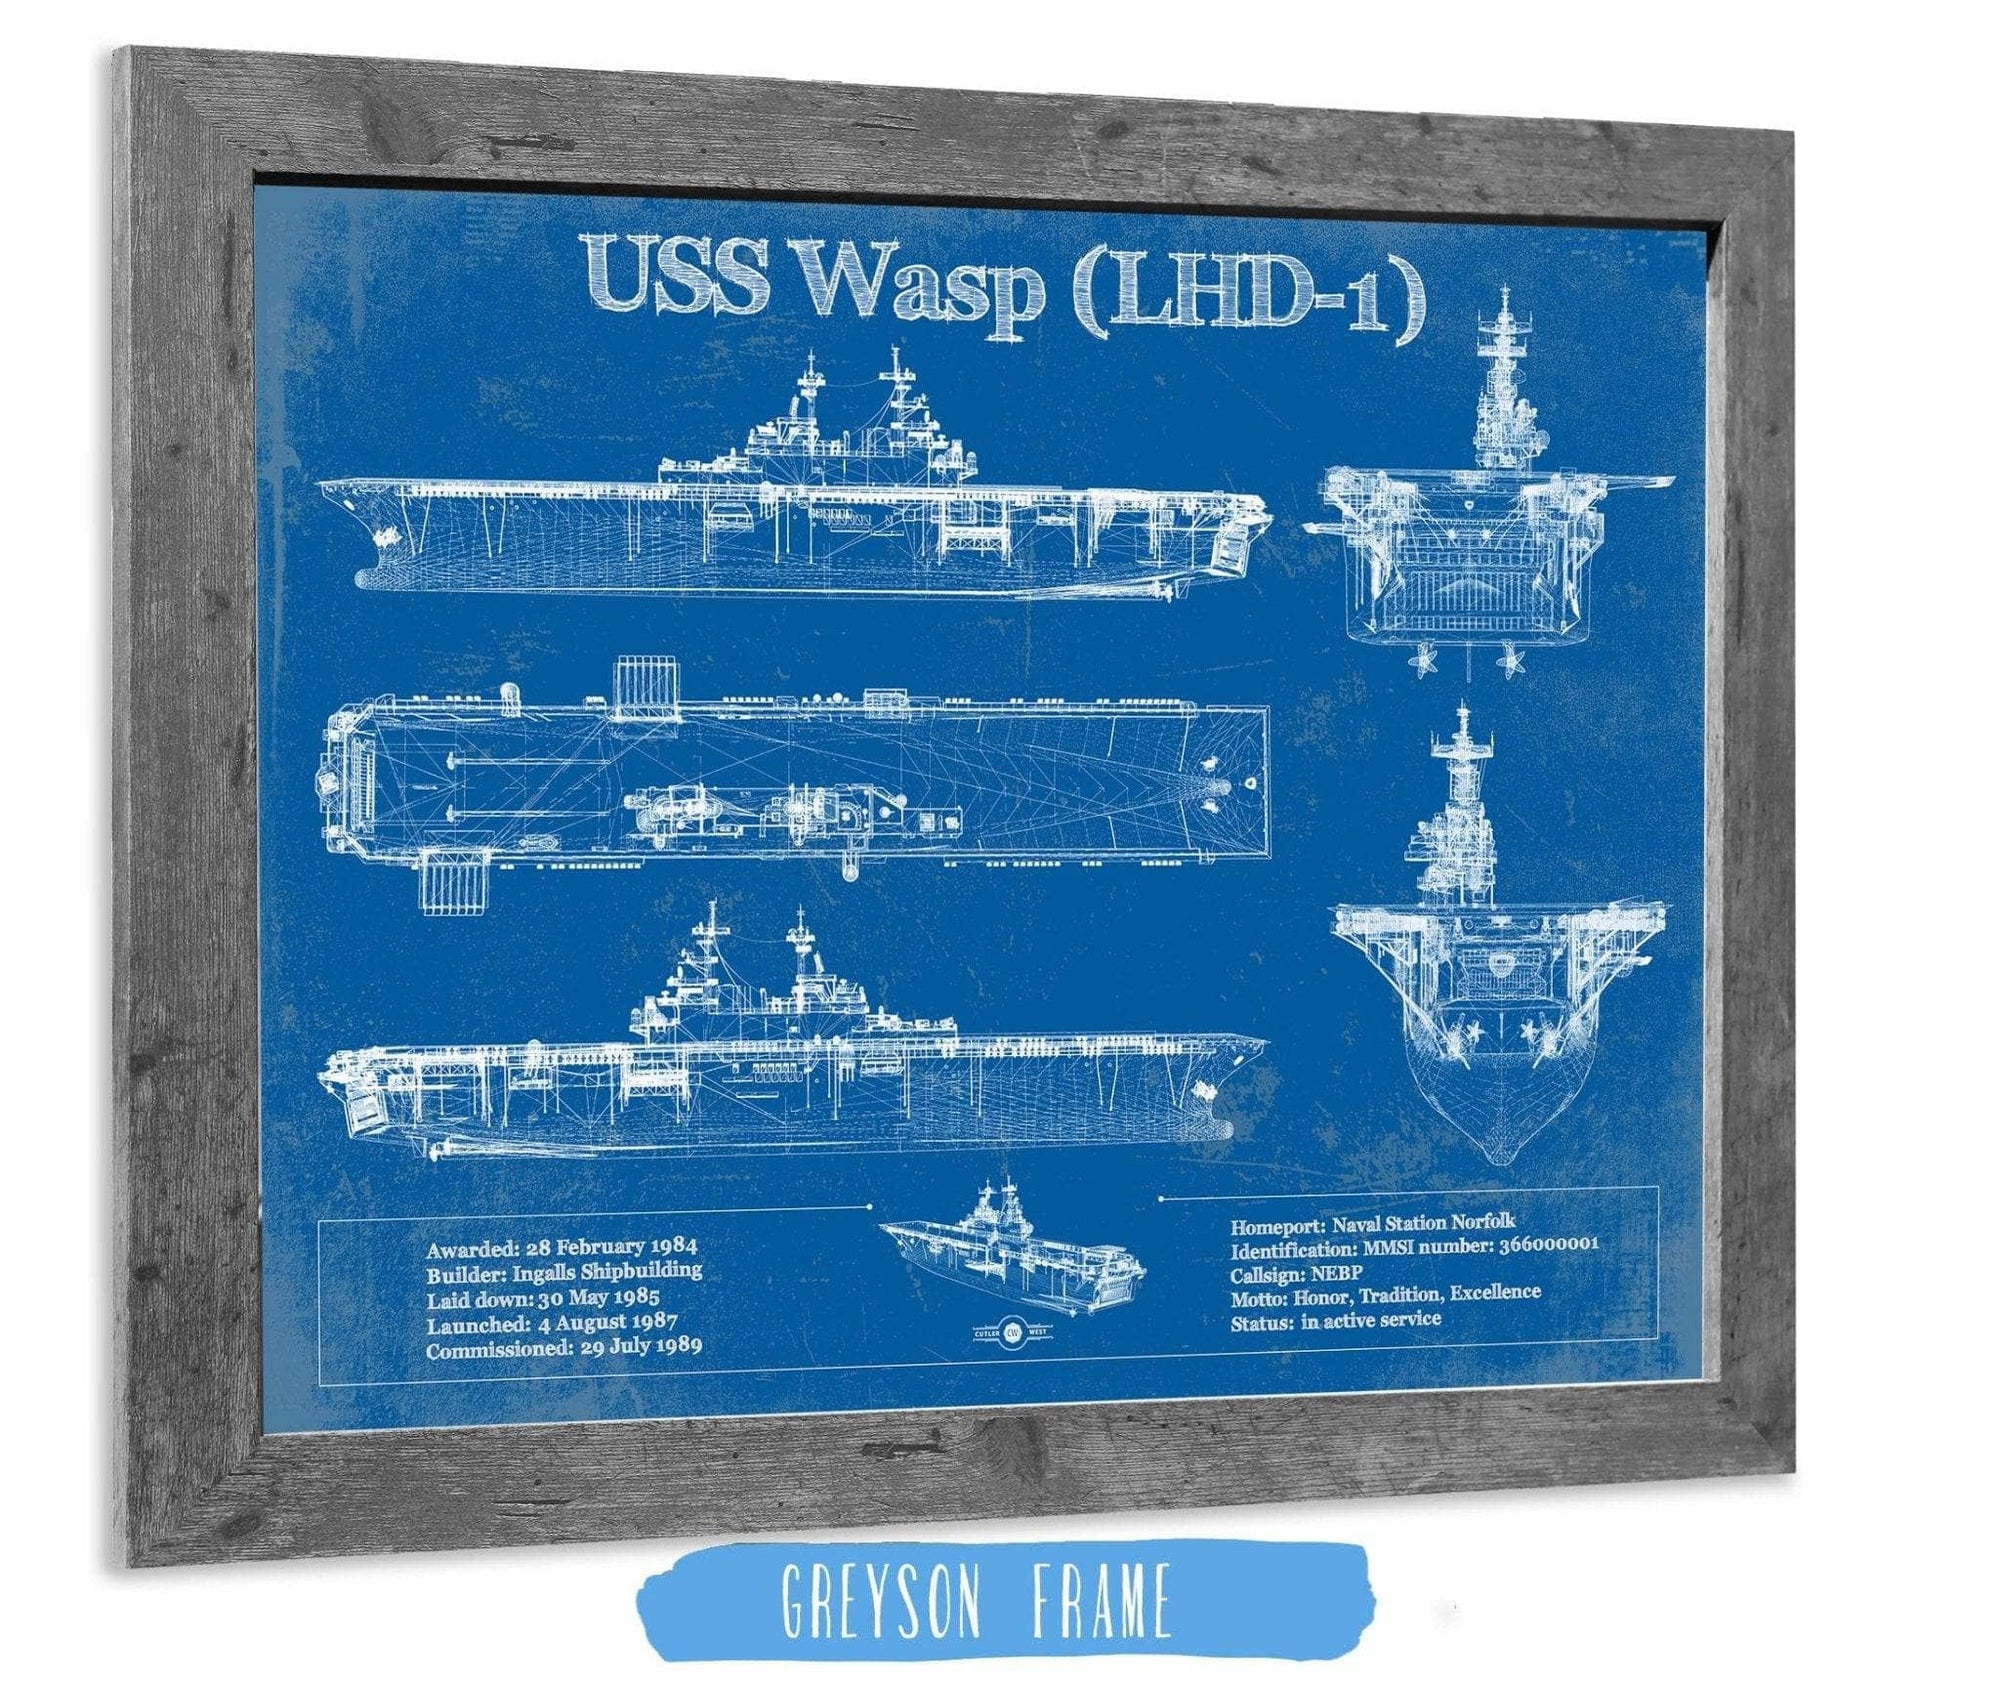 Cutler West Naval Military 14" x 11" / Greyson Frame USS Wasp (LHD-1) Aircraft Carrier Blueprint Original Military Wall Art - Customizable 933311001_27707